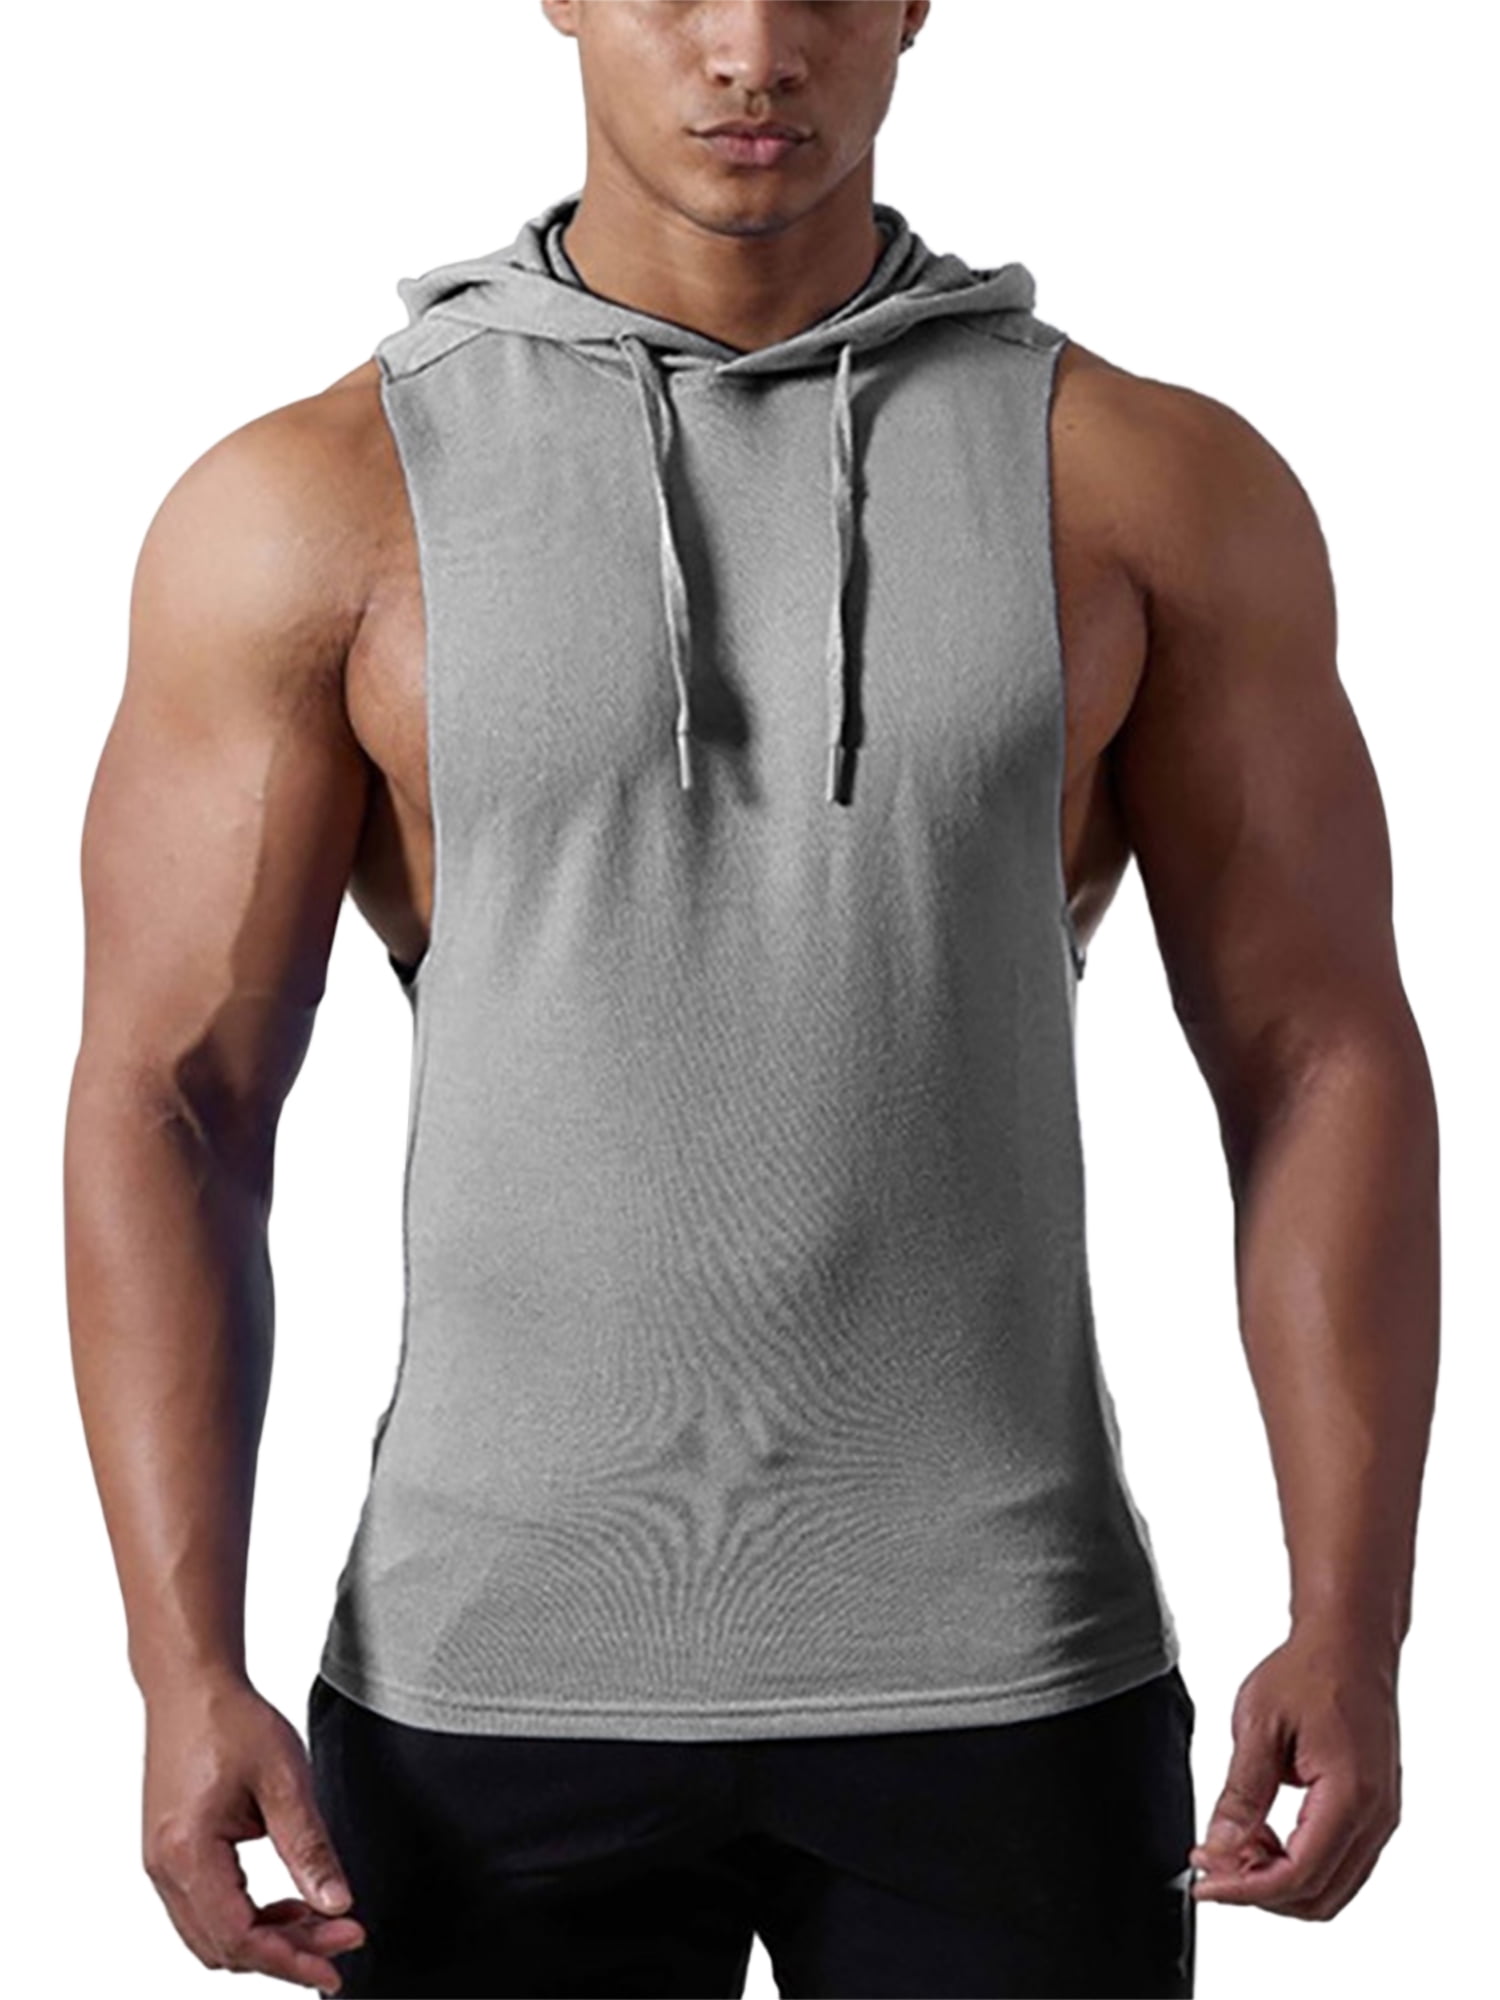 Las Vegas Raiders Men's Workout Tank Top Gym Muscle Tee Sleeveless T- shirt New